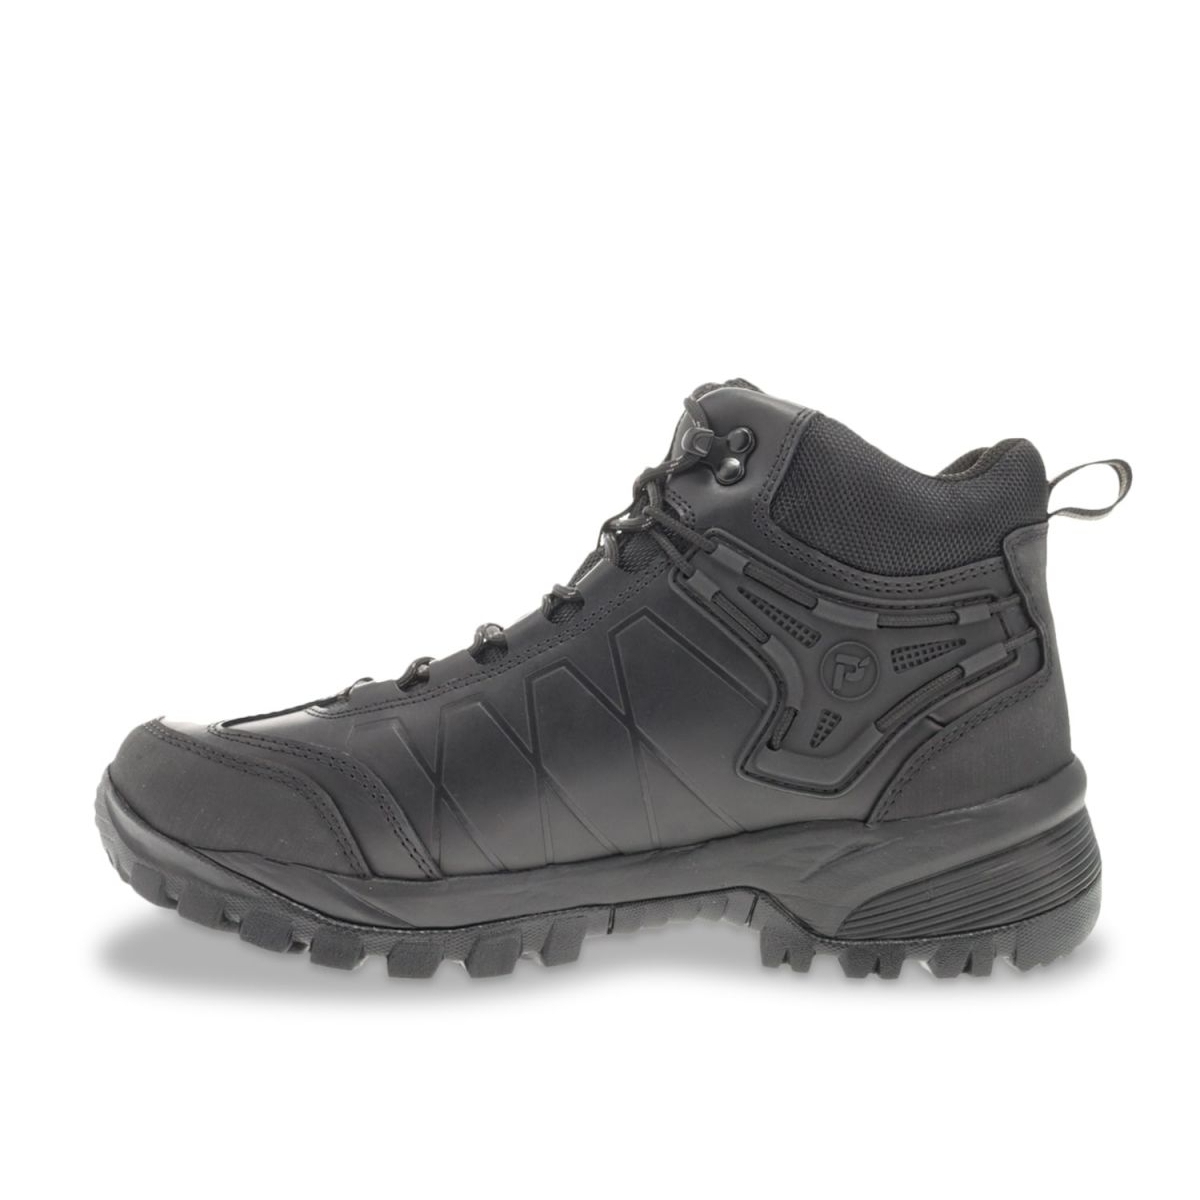 Propet Men's Ridge Walker Force Hiking Boots Black - MBA052LBLK BLACK - BLACK, 14 WIDE